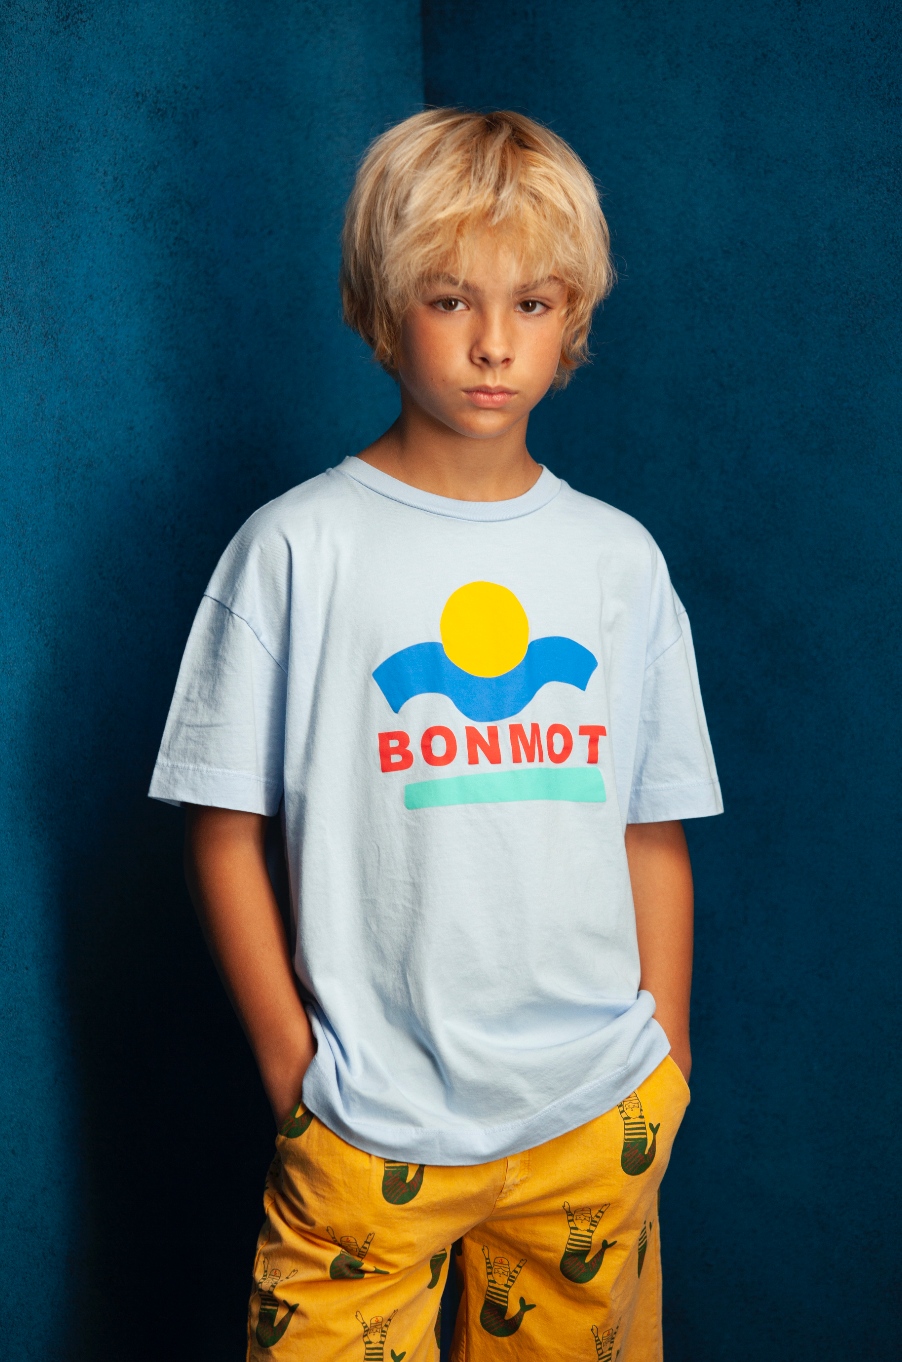 Camiseta logo Bonmot- BONMOT